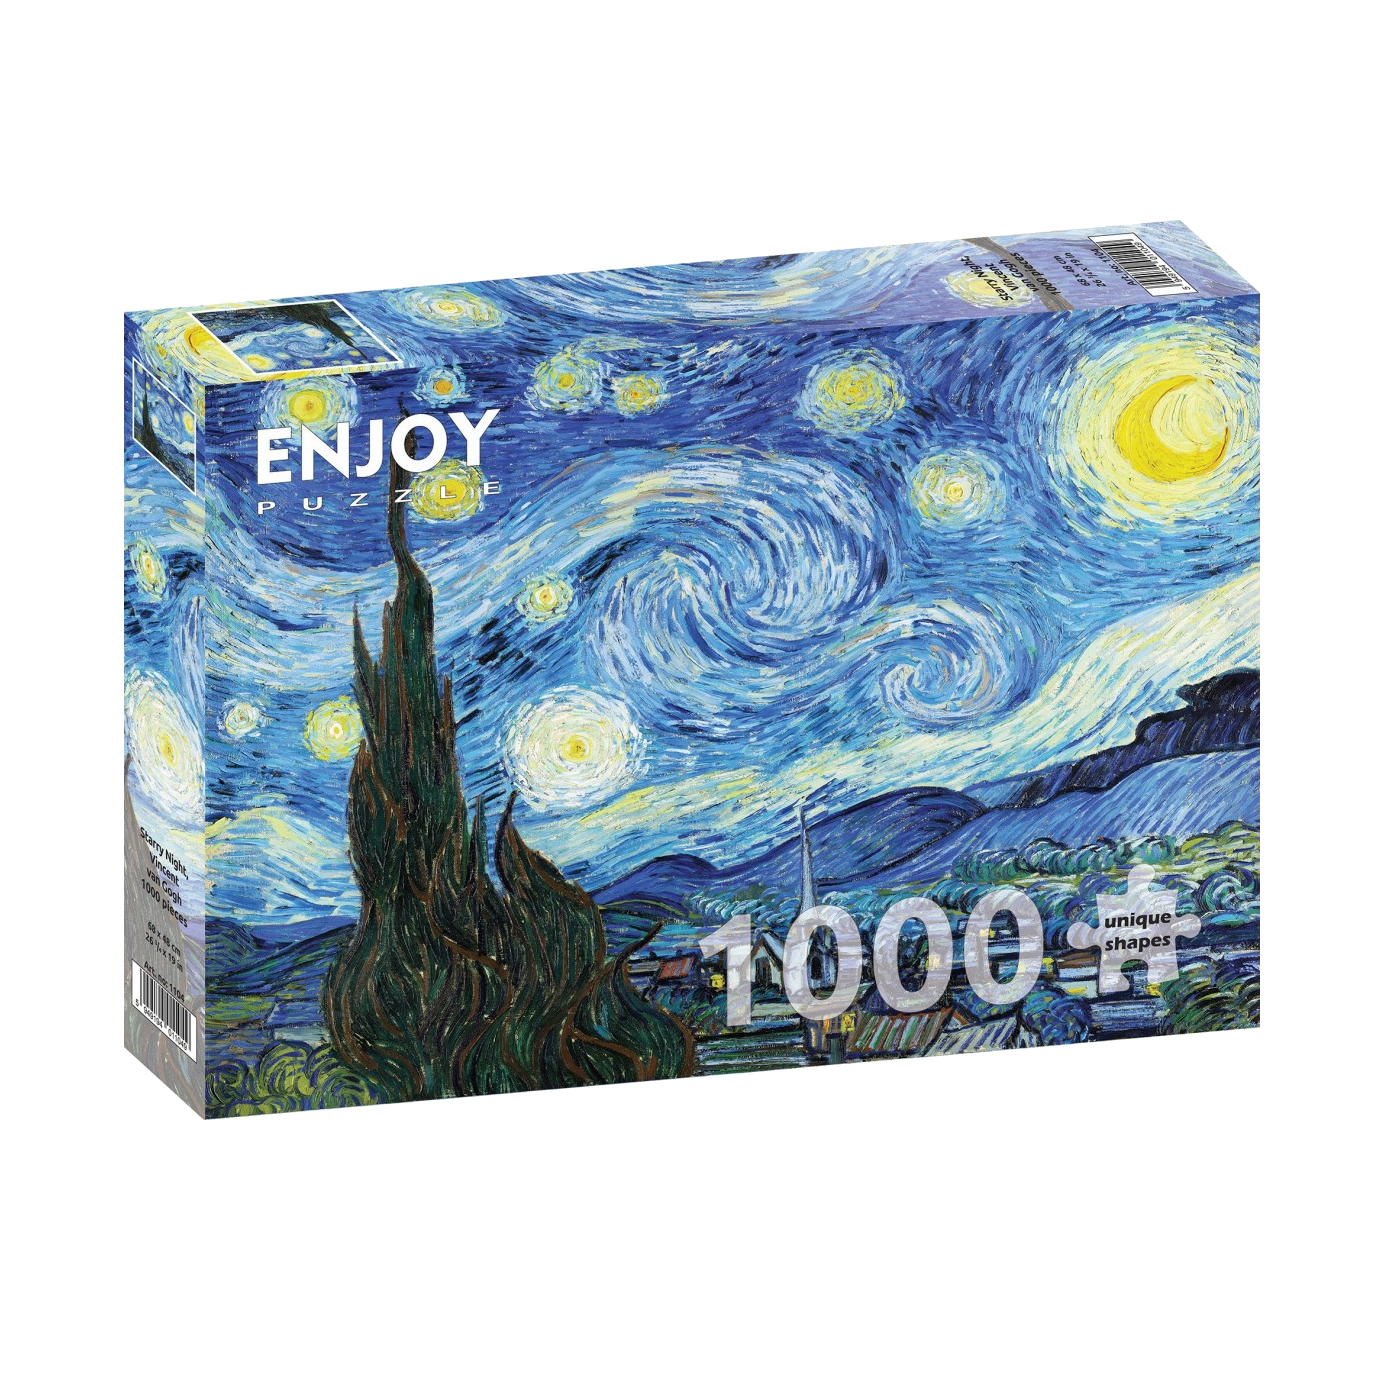 Van Gogh: Starry Night